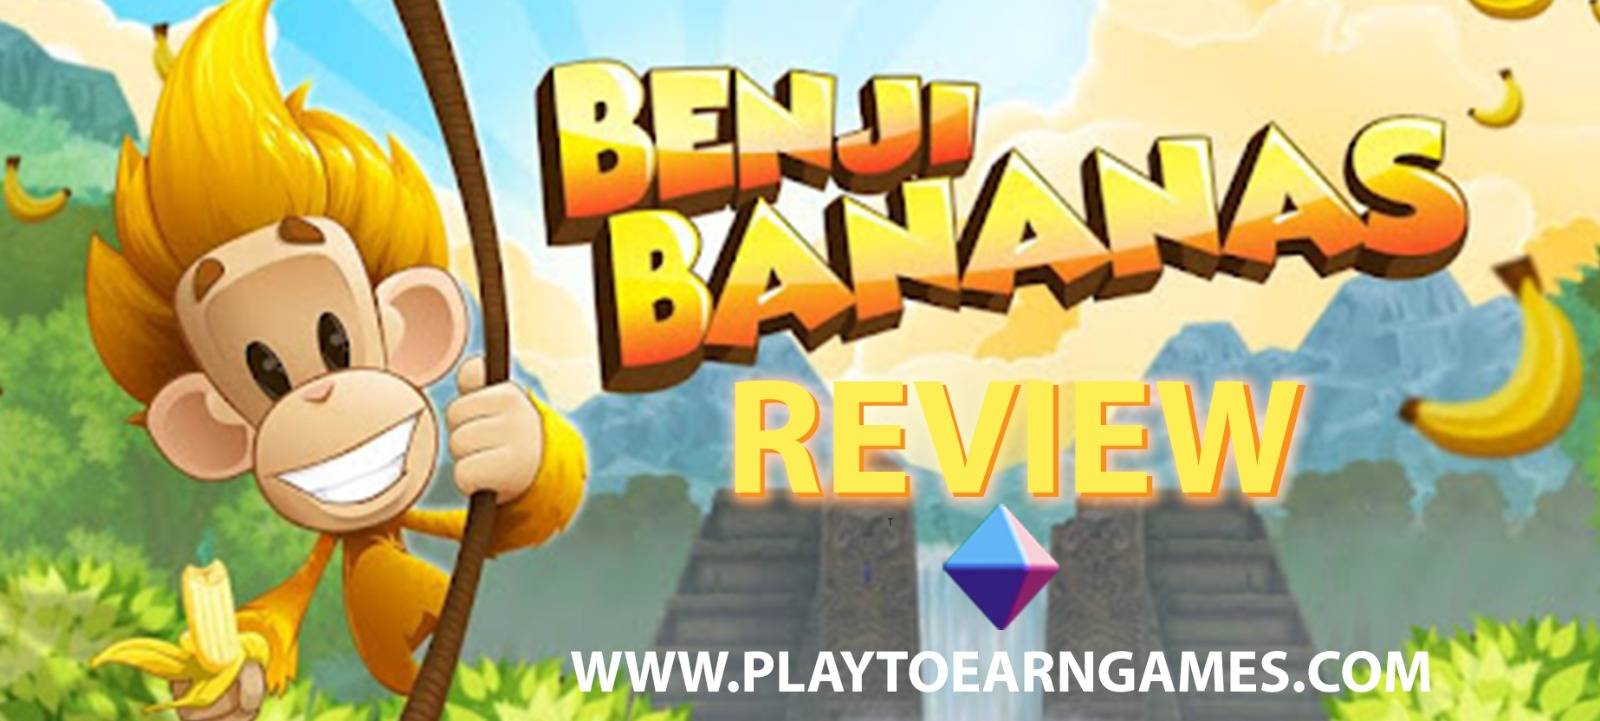 Benji Bananas - Reseña del juego